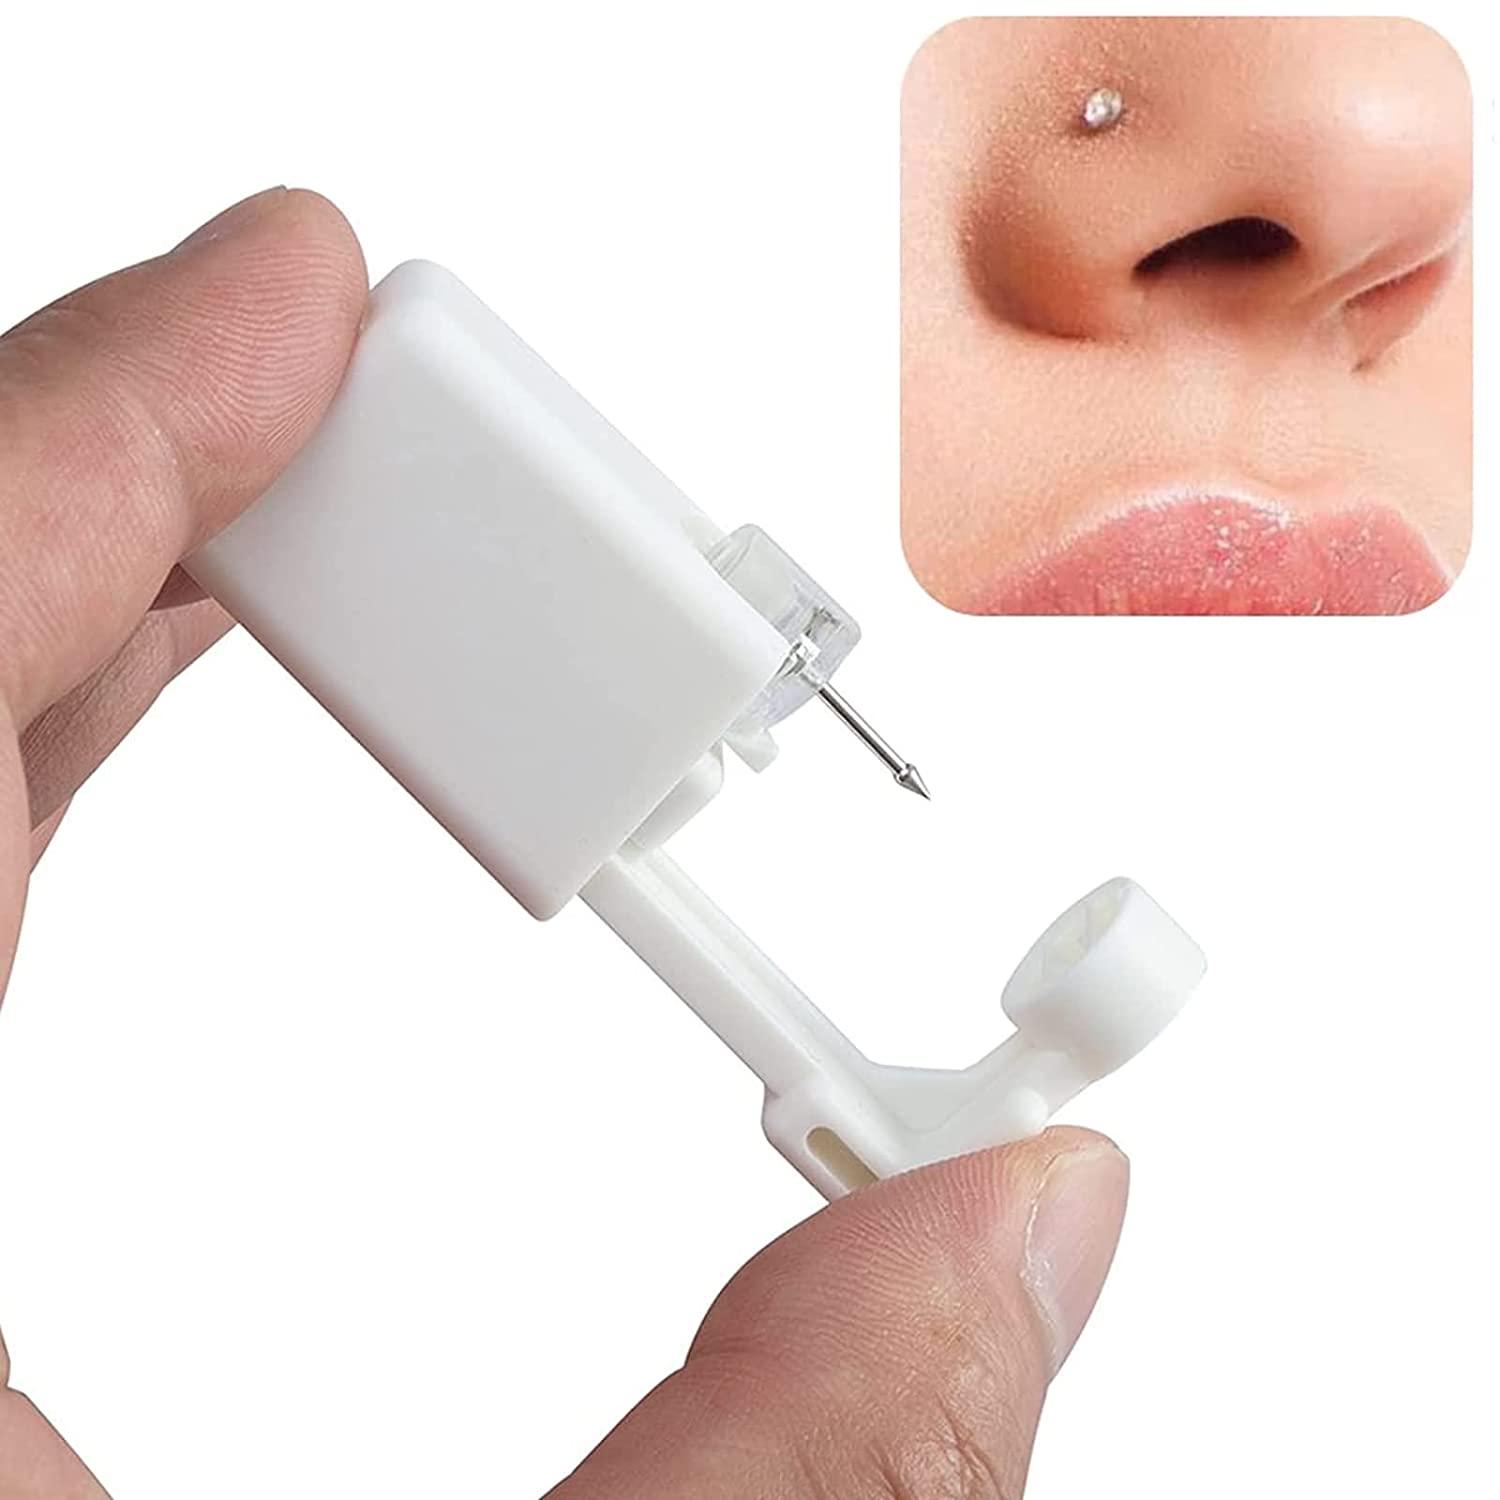 2 Pcs Painless Nose Piercing Kit With 10 Pcs Nose Studs Disposable